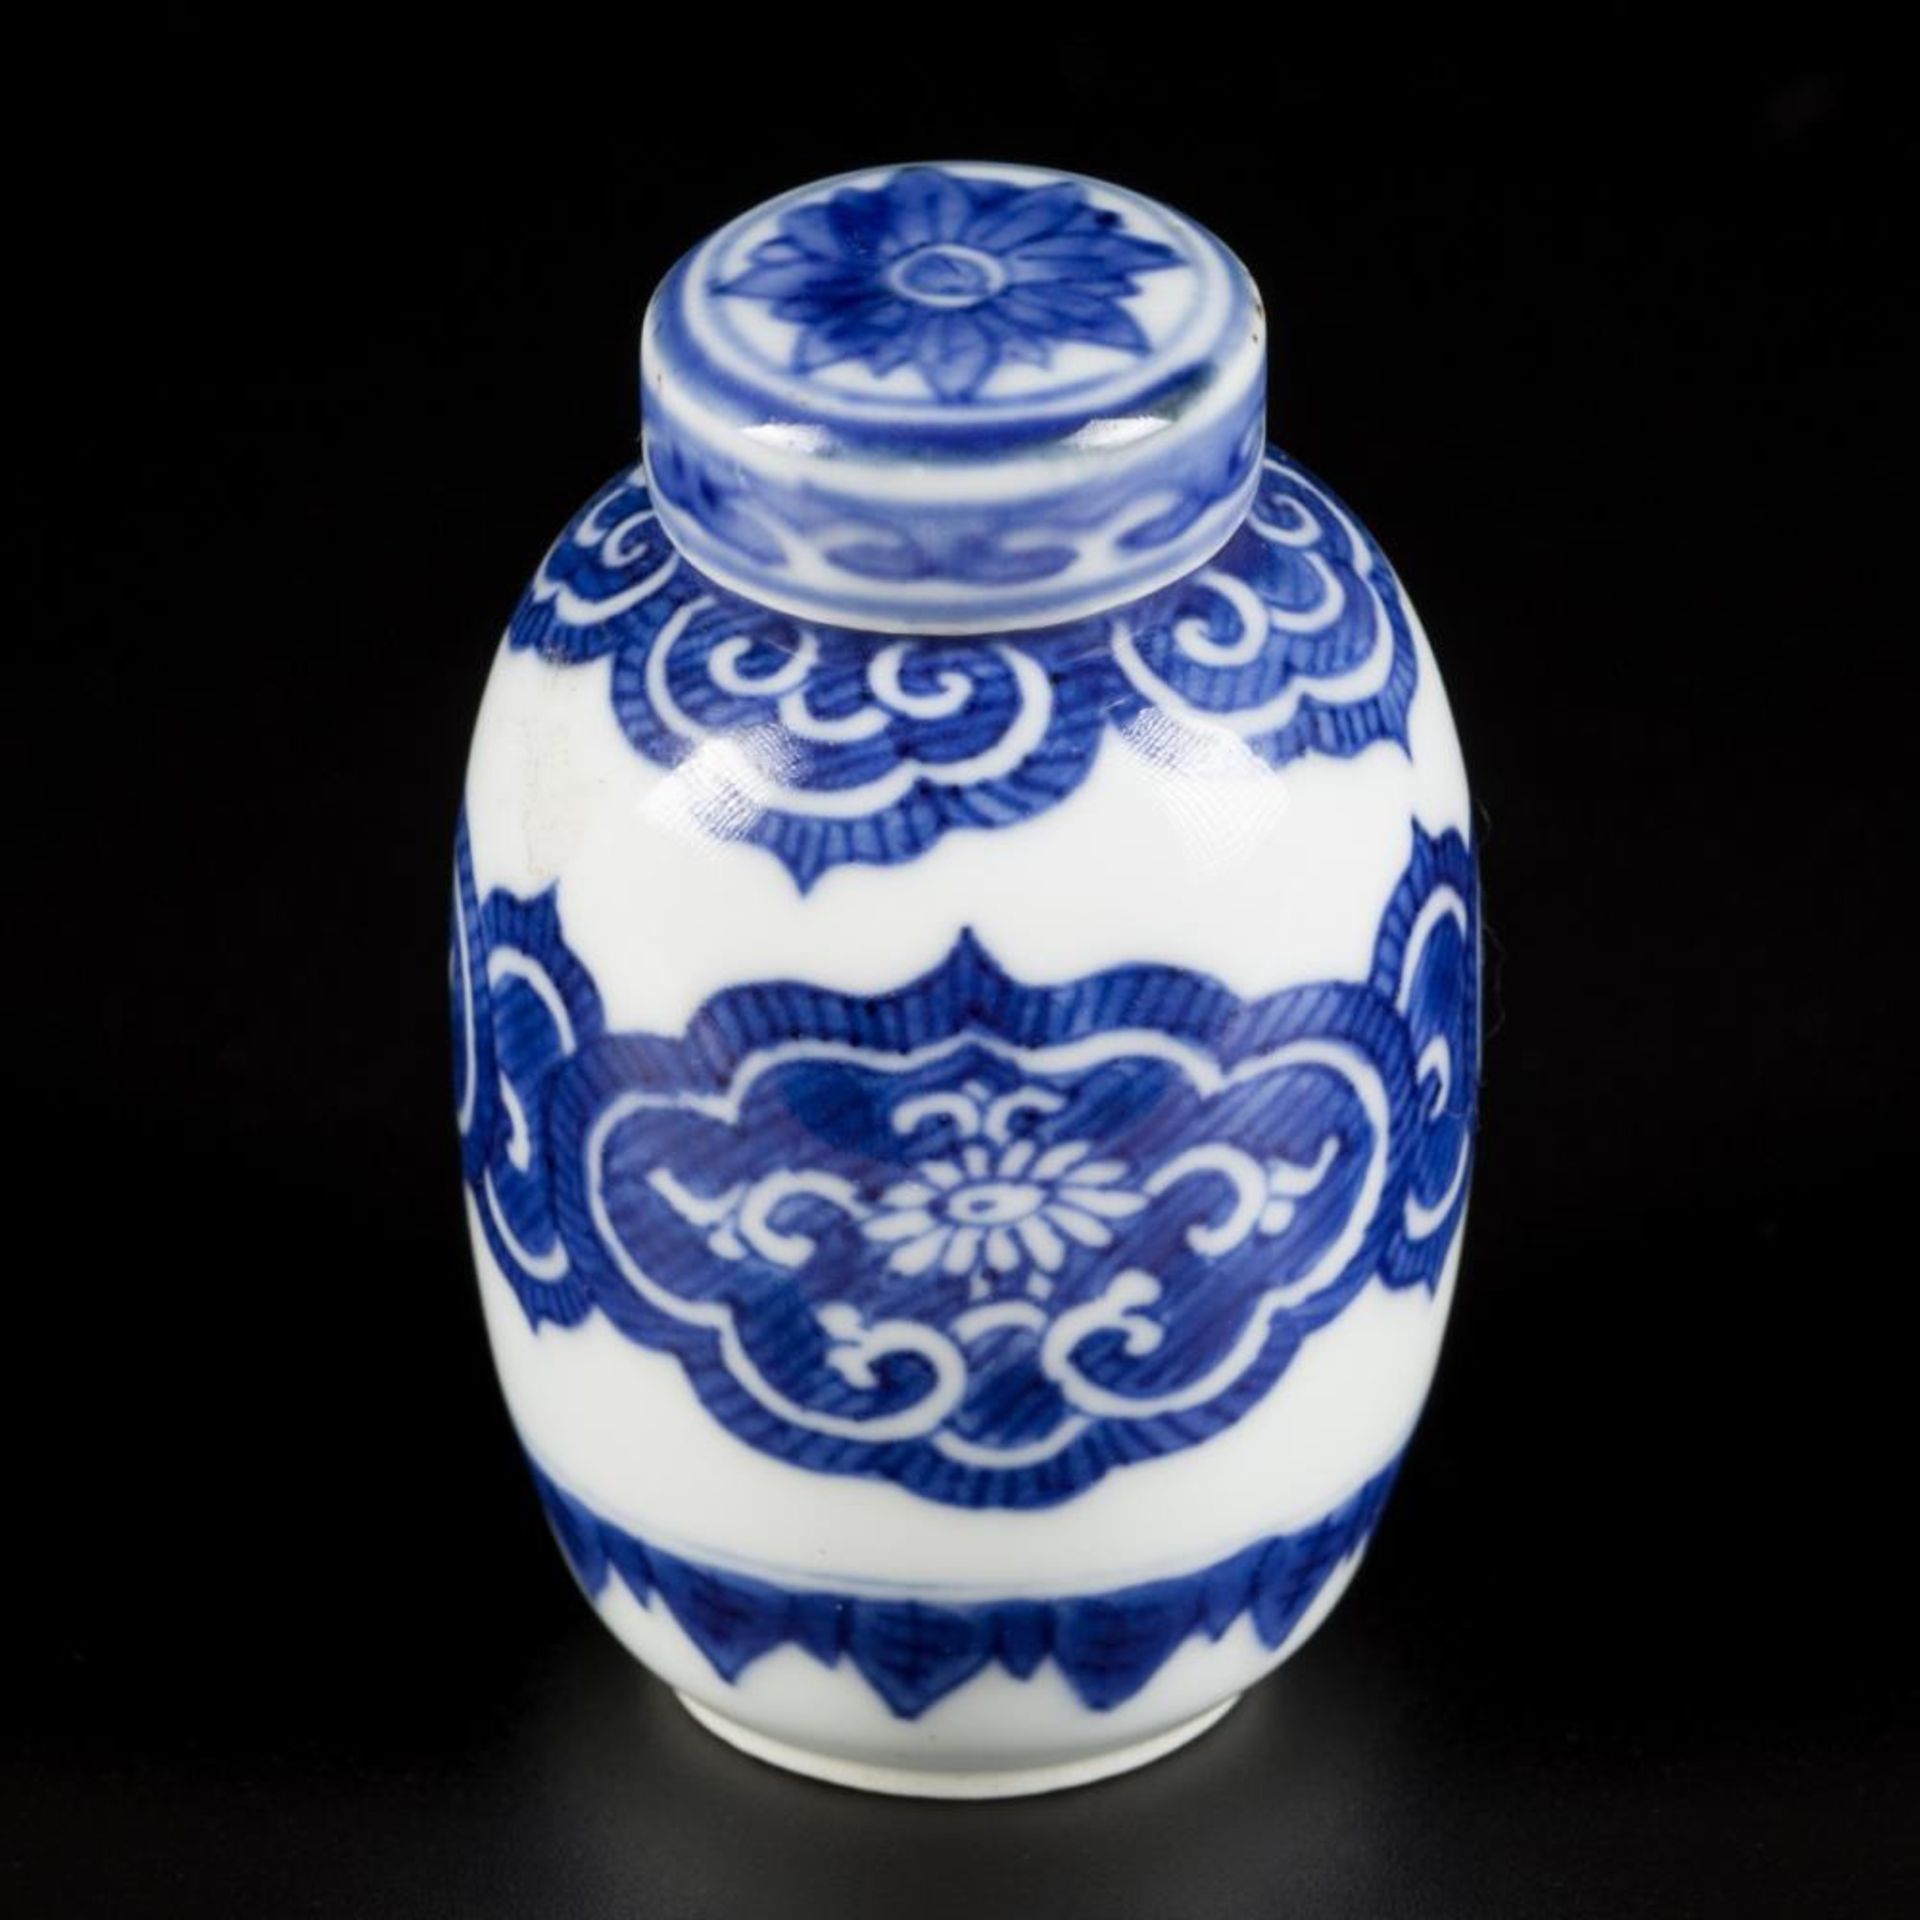 A porcelain lidded jar with floral decoration, marked Yu "jade", China, Kangxi.